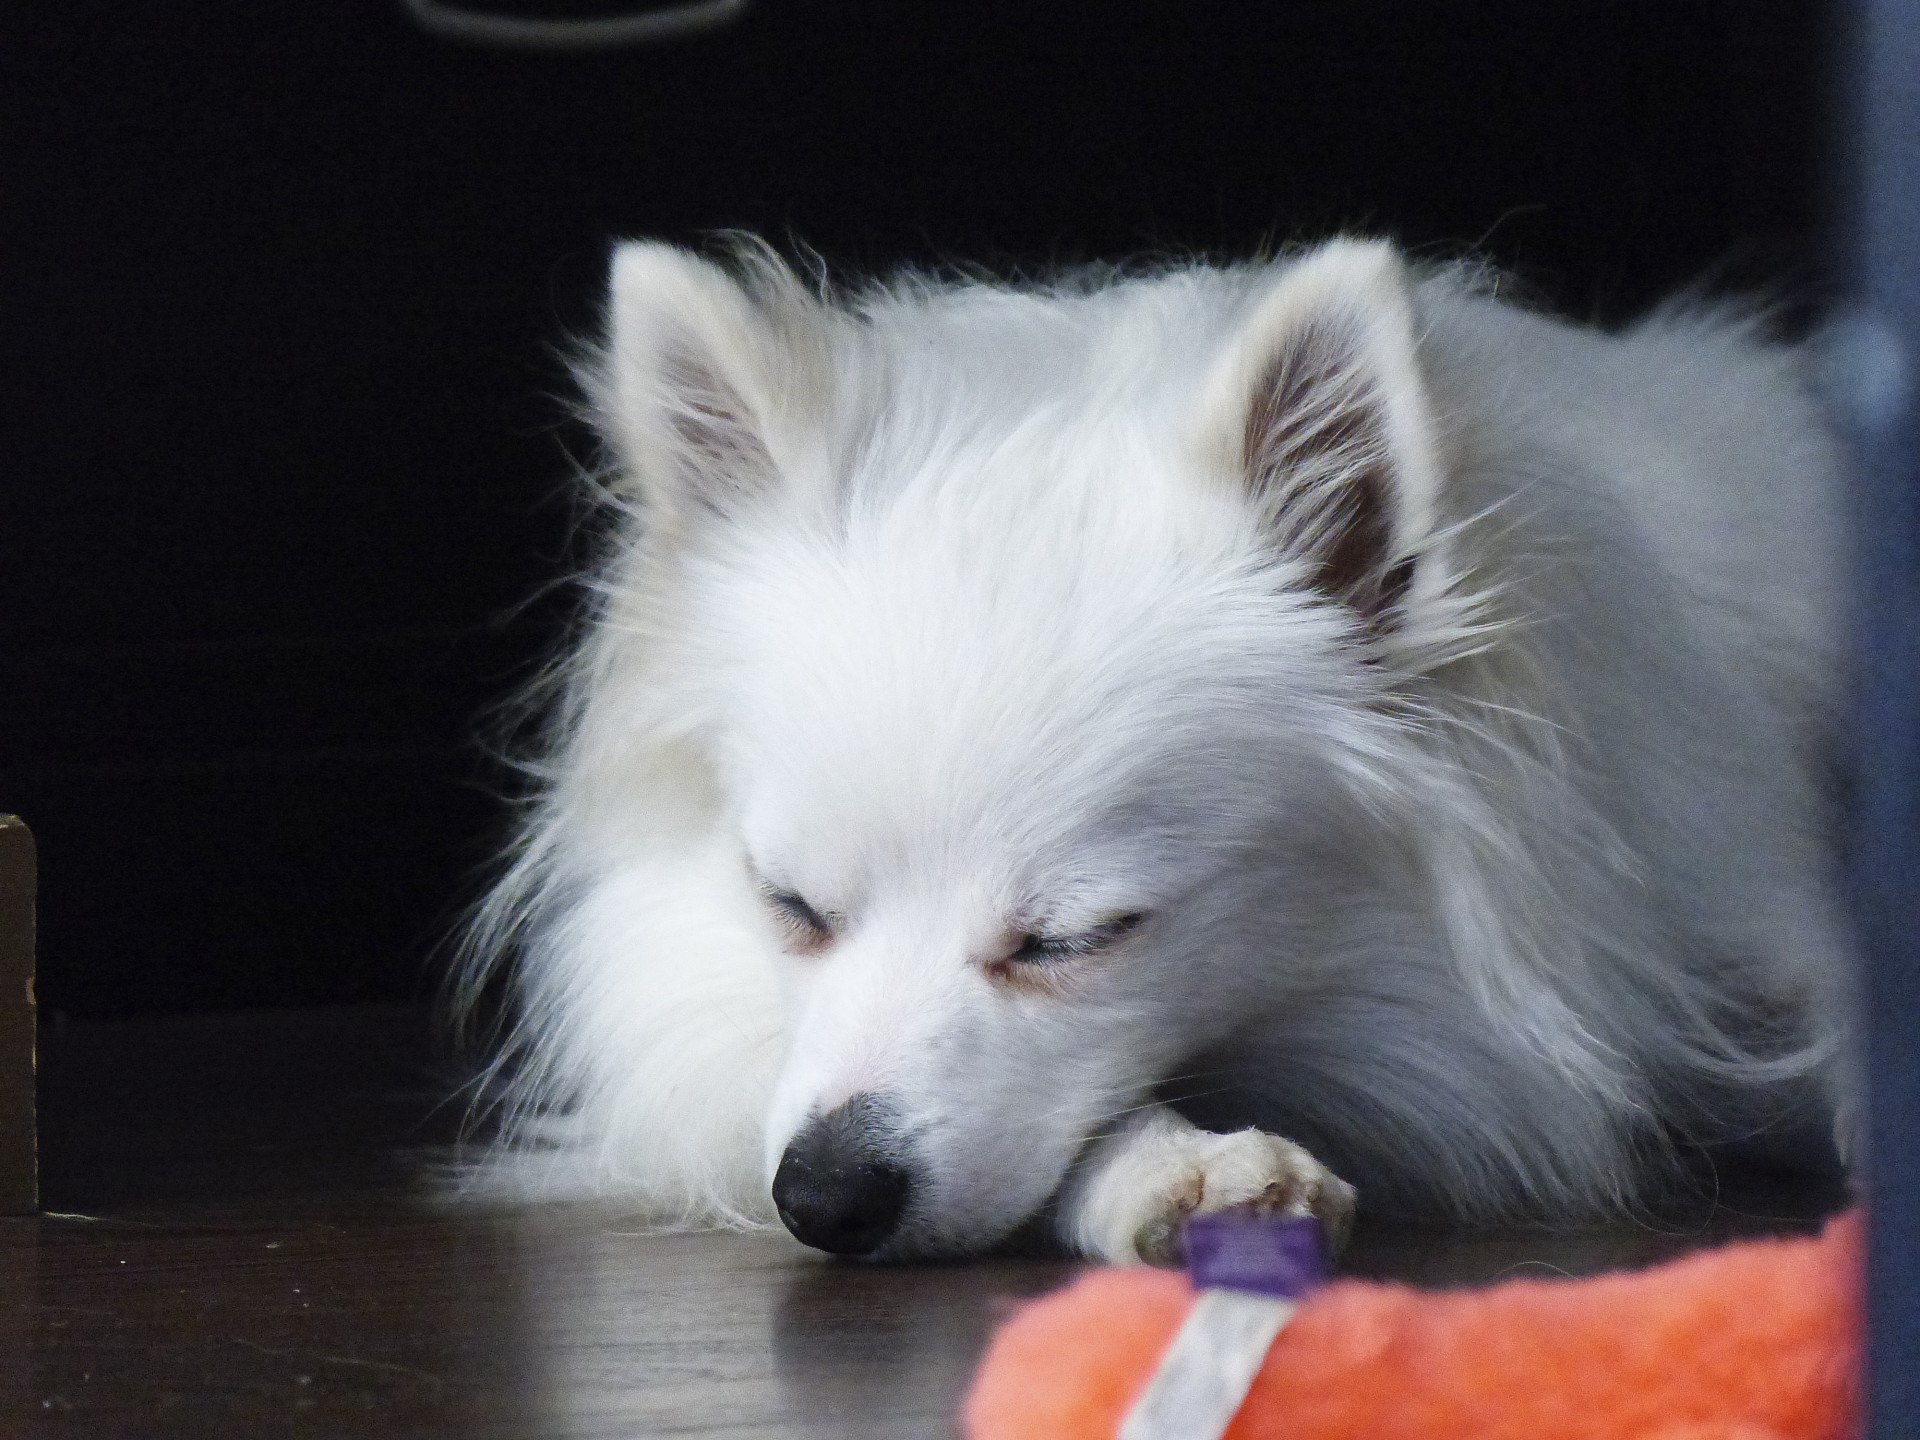 Pomeranian White Puppy Sleeping Wood Floor Free Image From Needpix Com